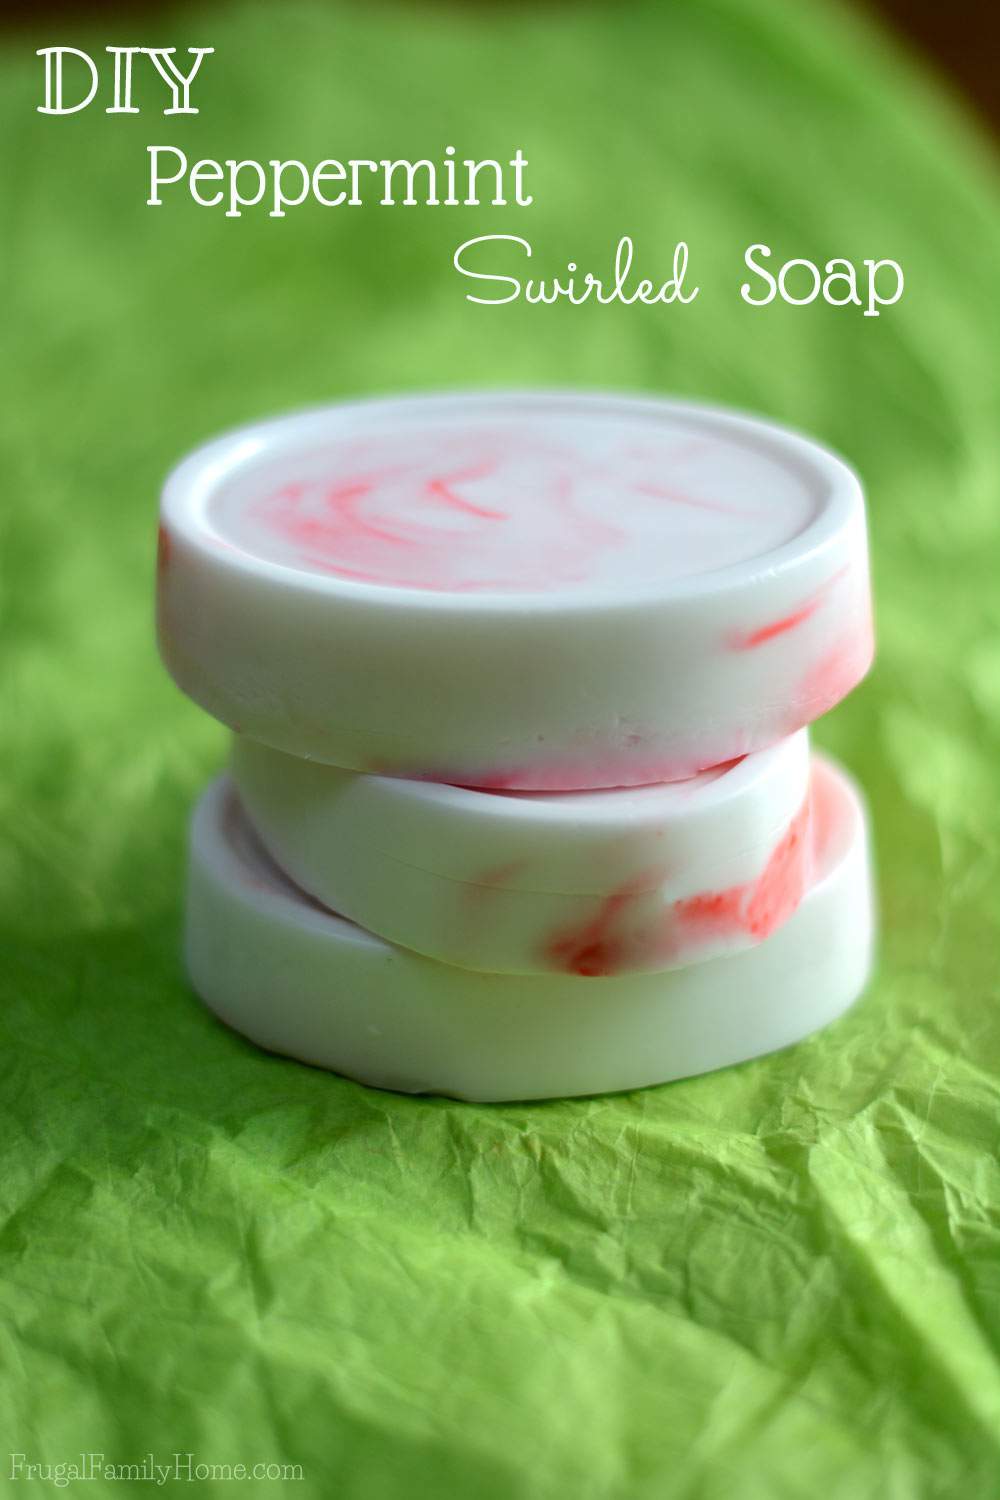 DIY Peppermint Swirled Soap